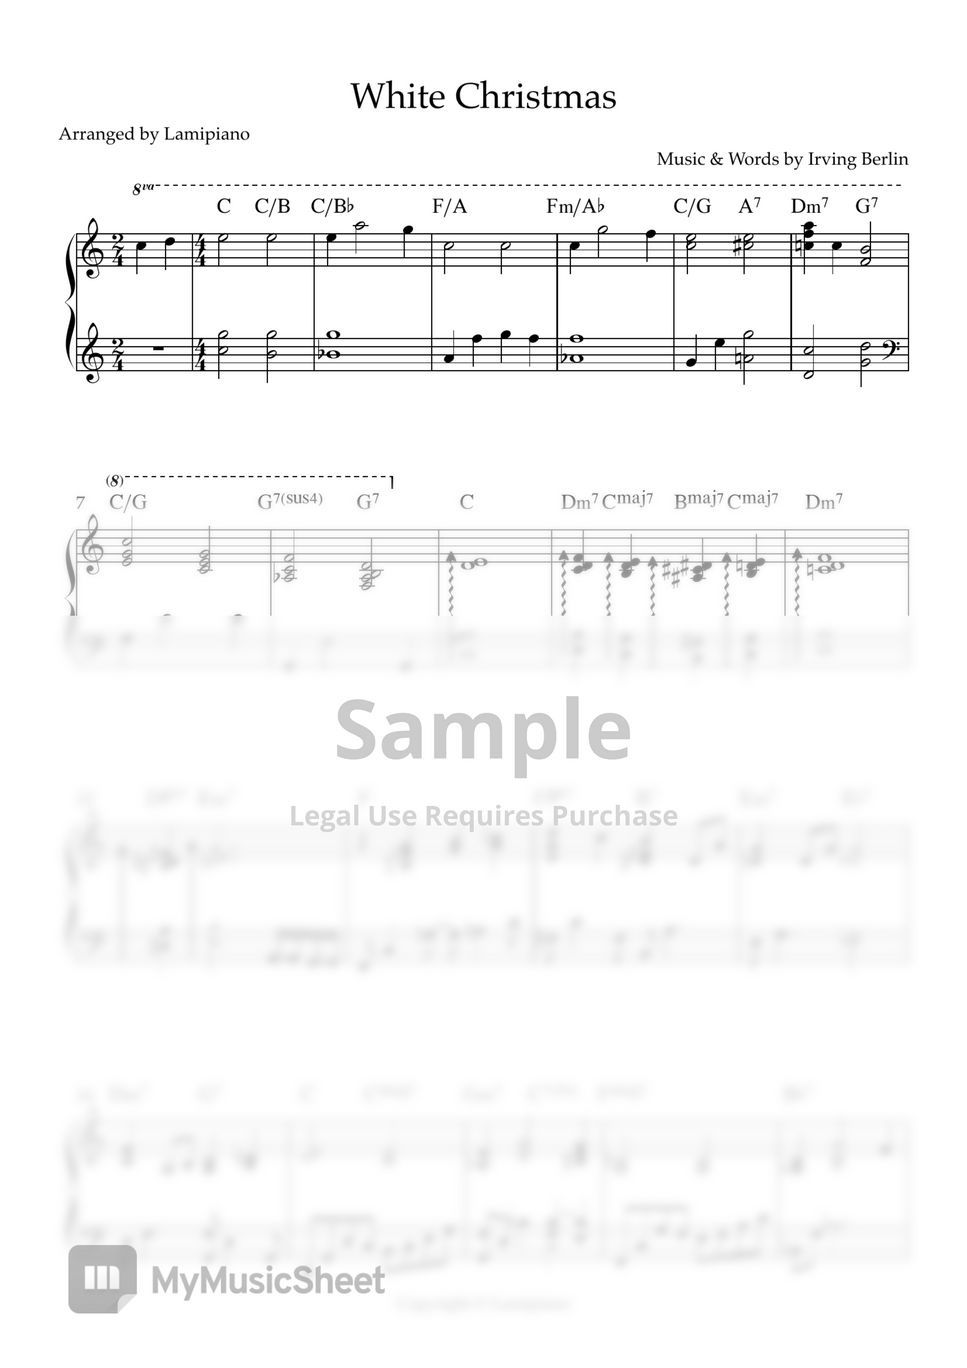 Irving Berlin - White Christmas (Jazz Ballad/Christmas piano/Carol) by Lamipiano